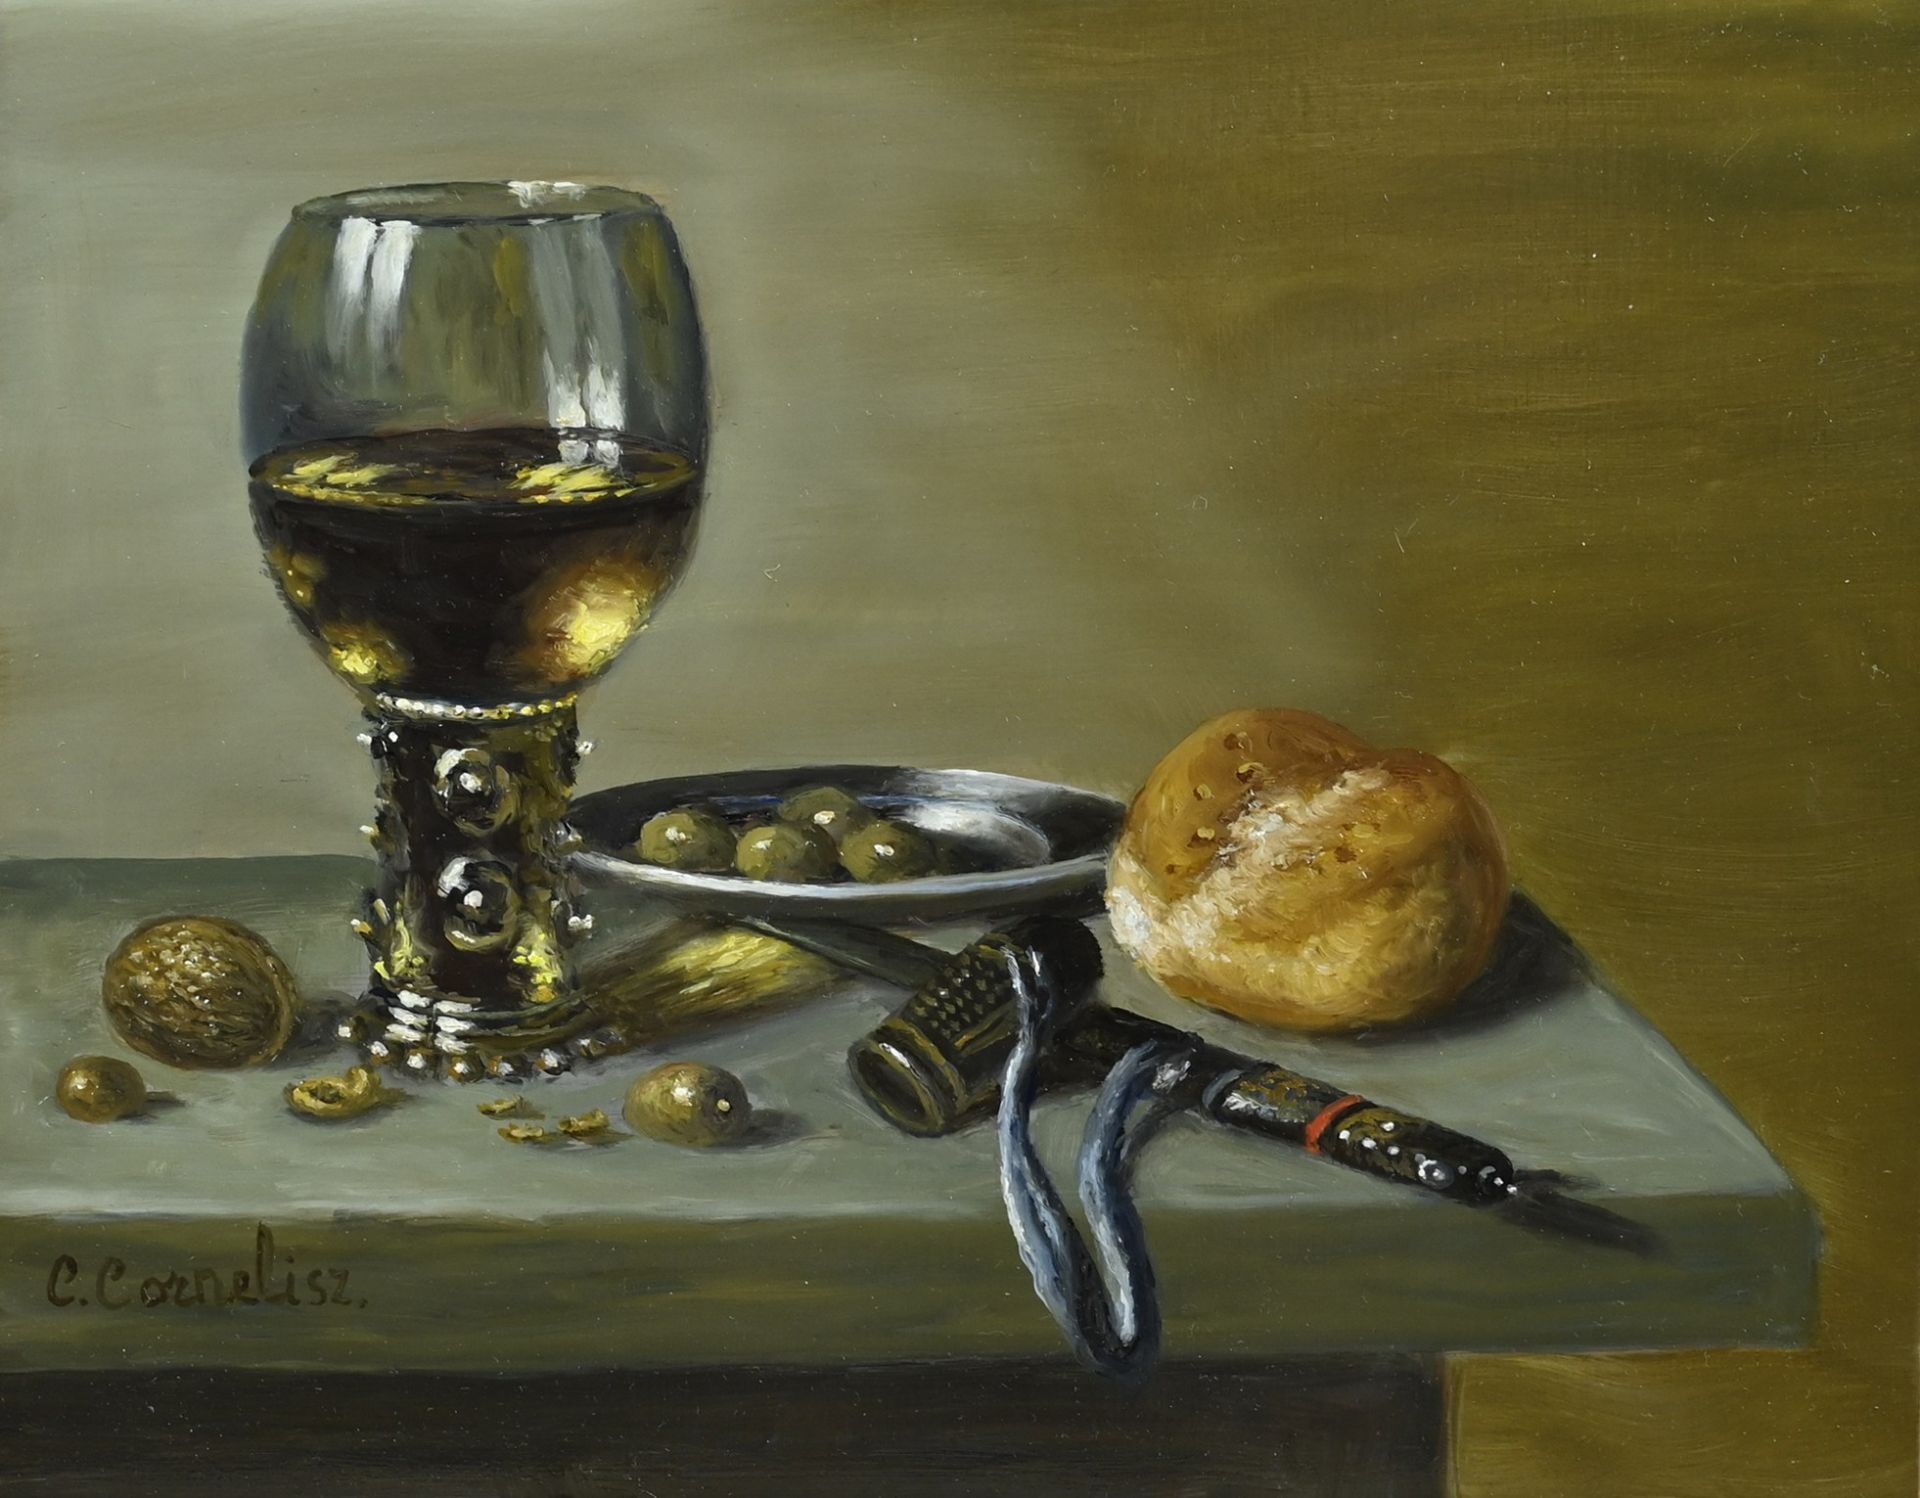 C. Cornelisz , Still life with Roemer, bread, walnut etc.